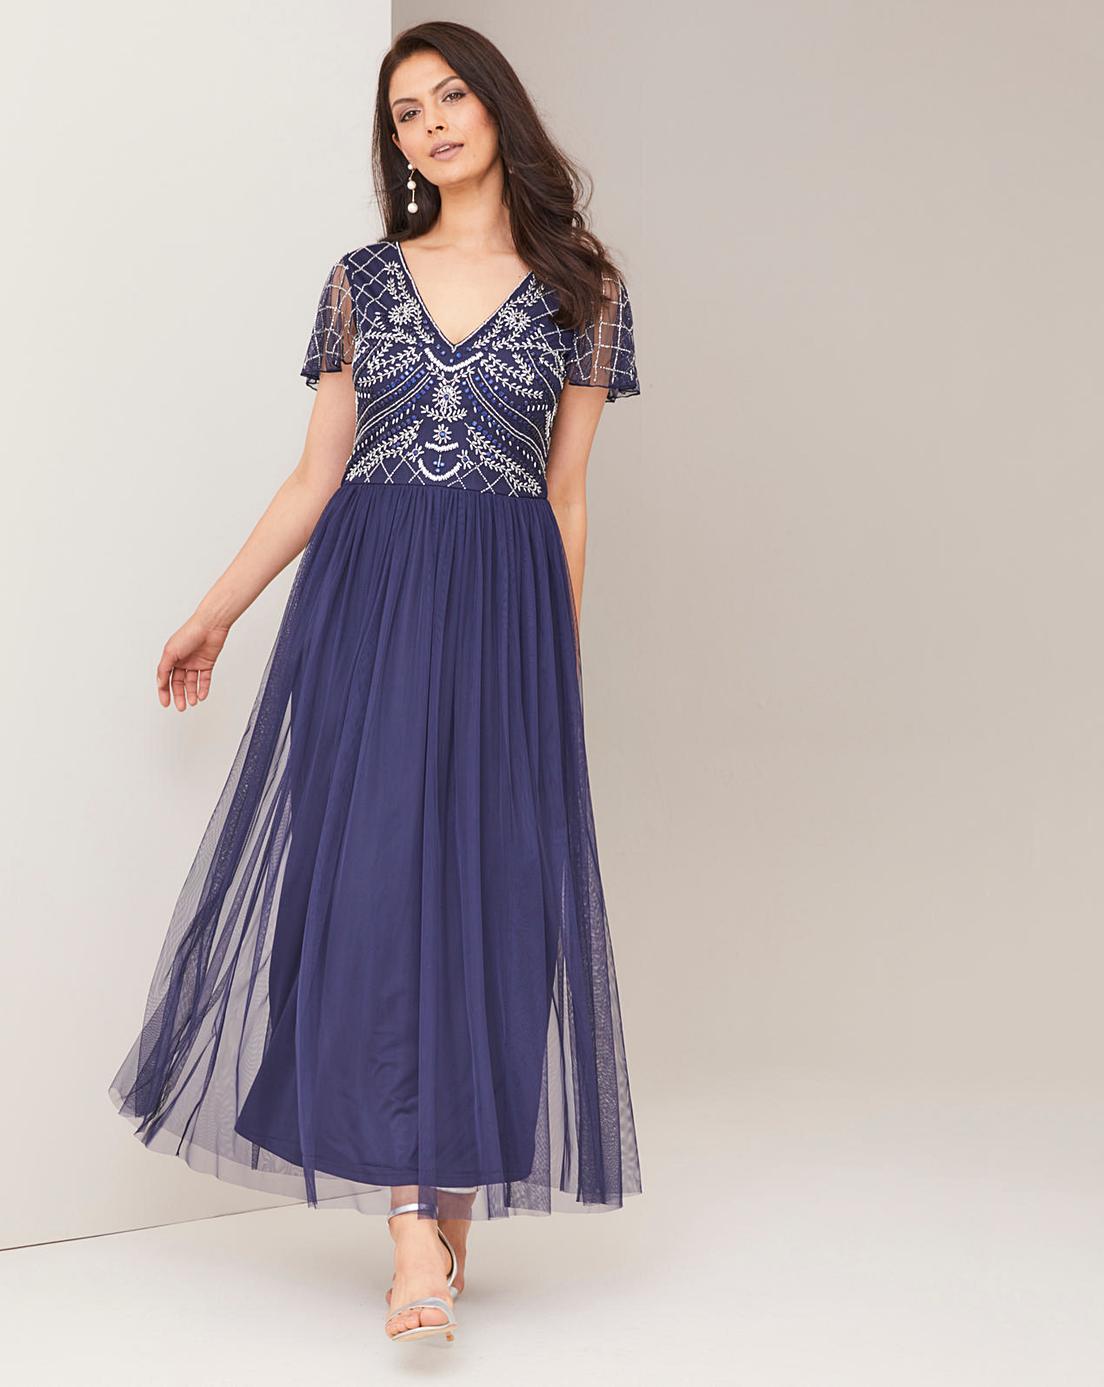 Joanna Hope Embellished Bodice Dress | Oxendales